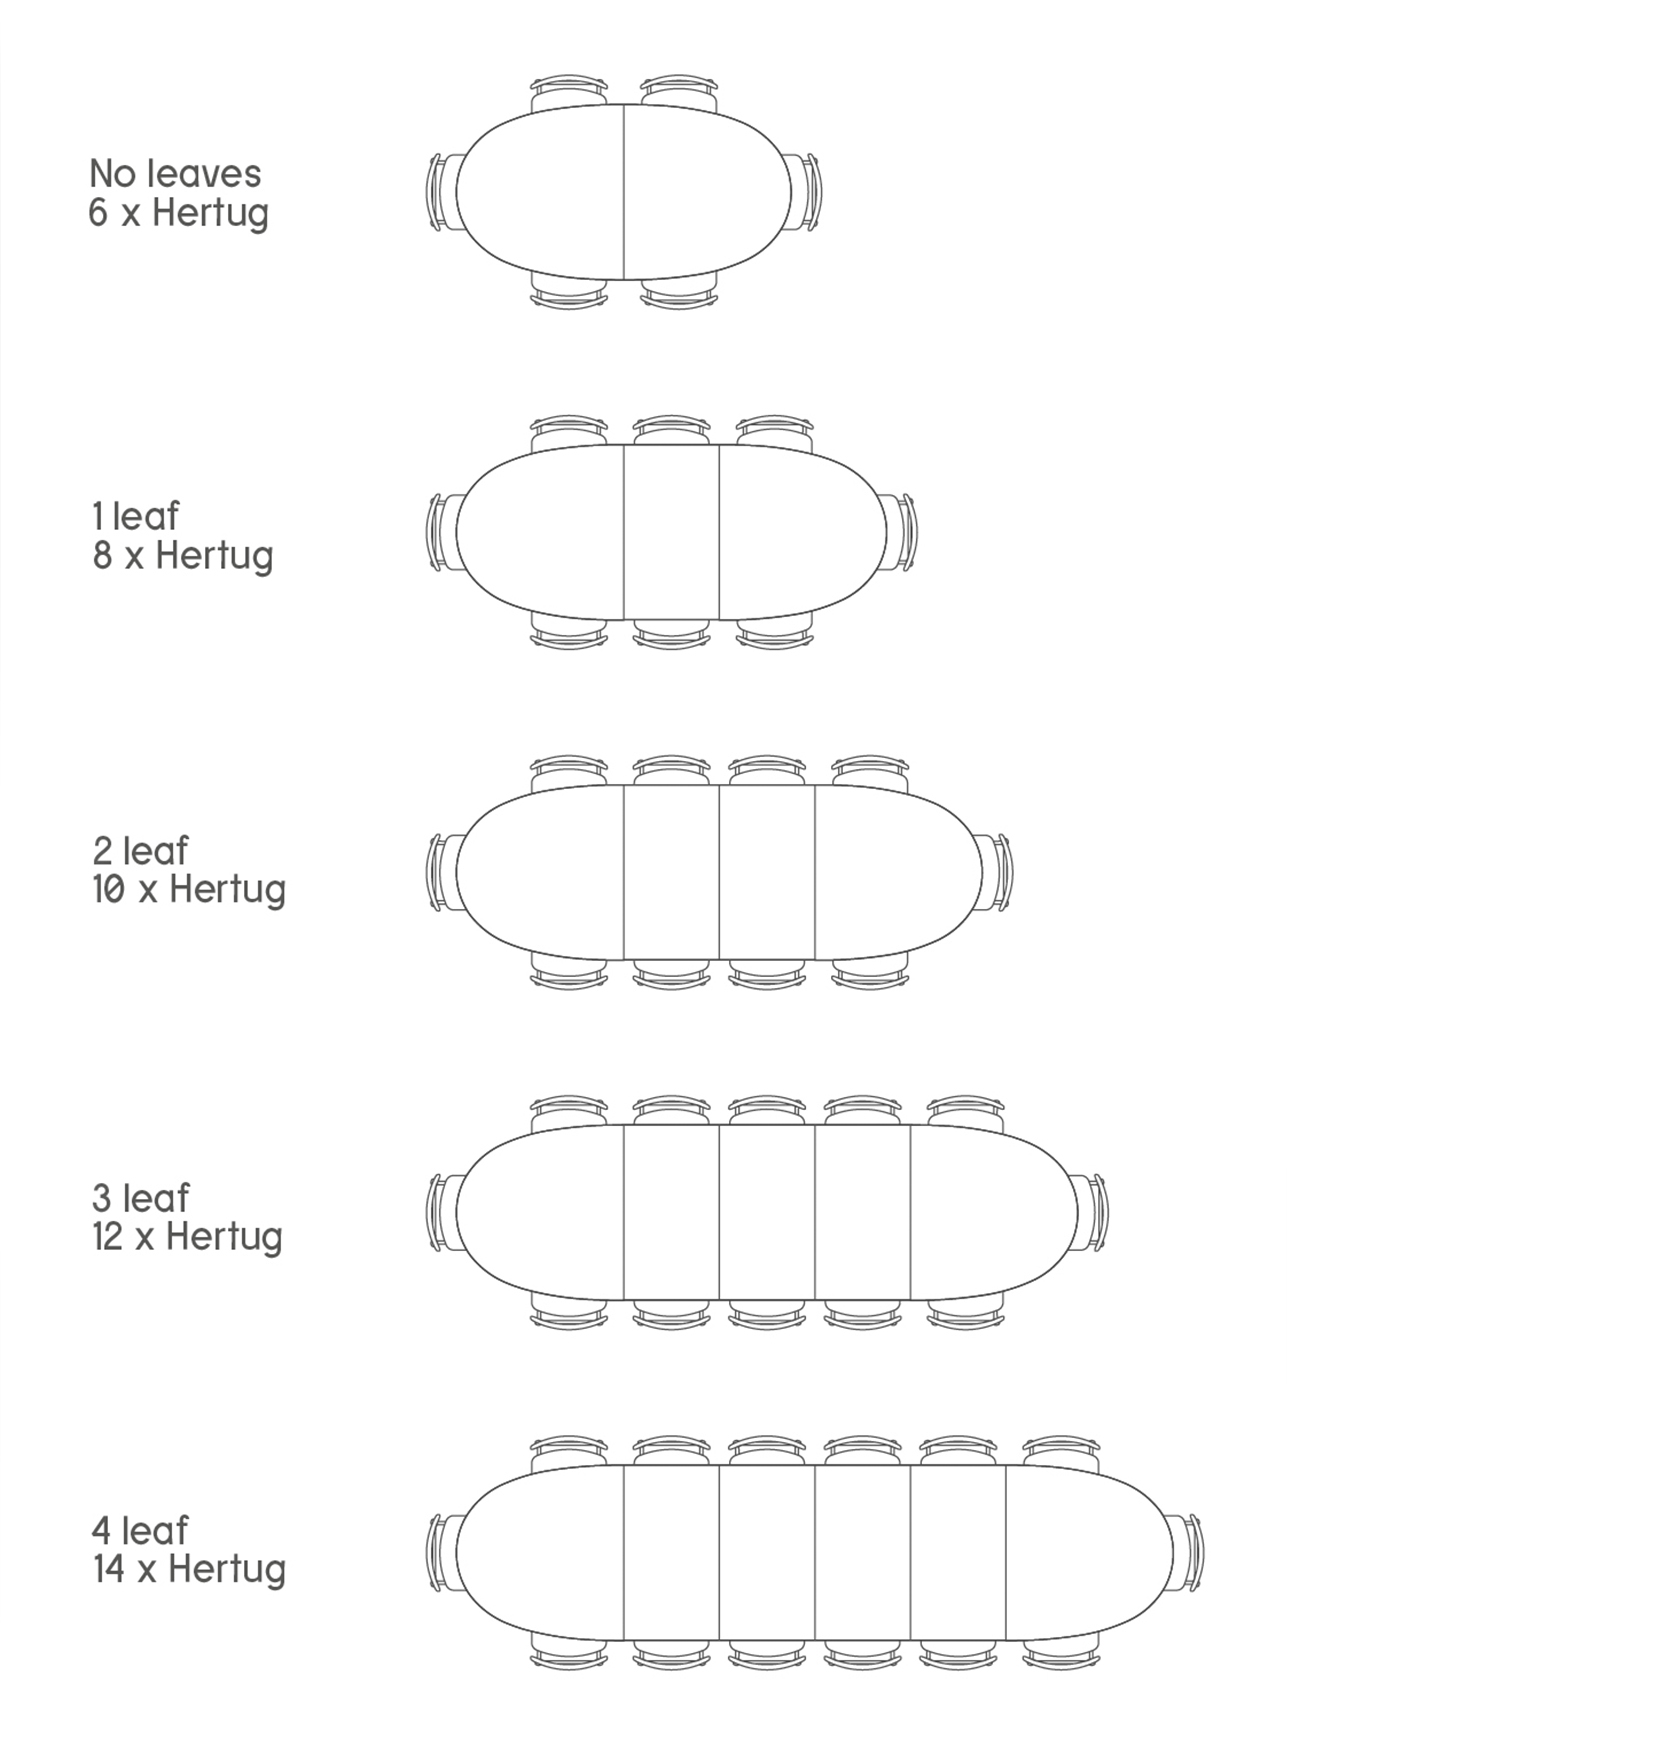 Øya seating arrangements